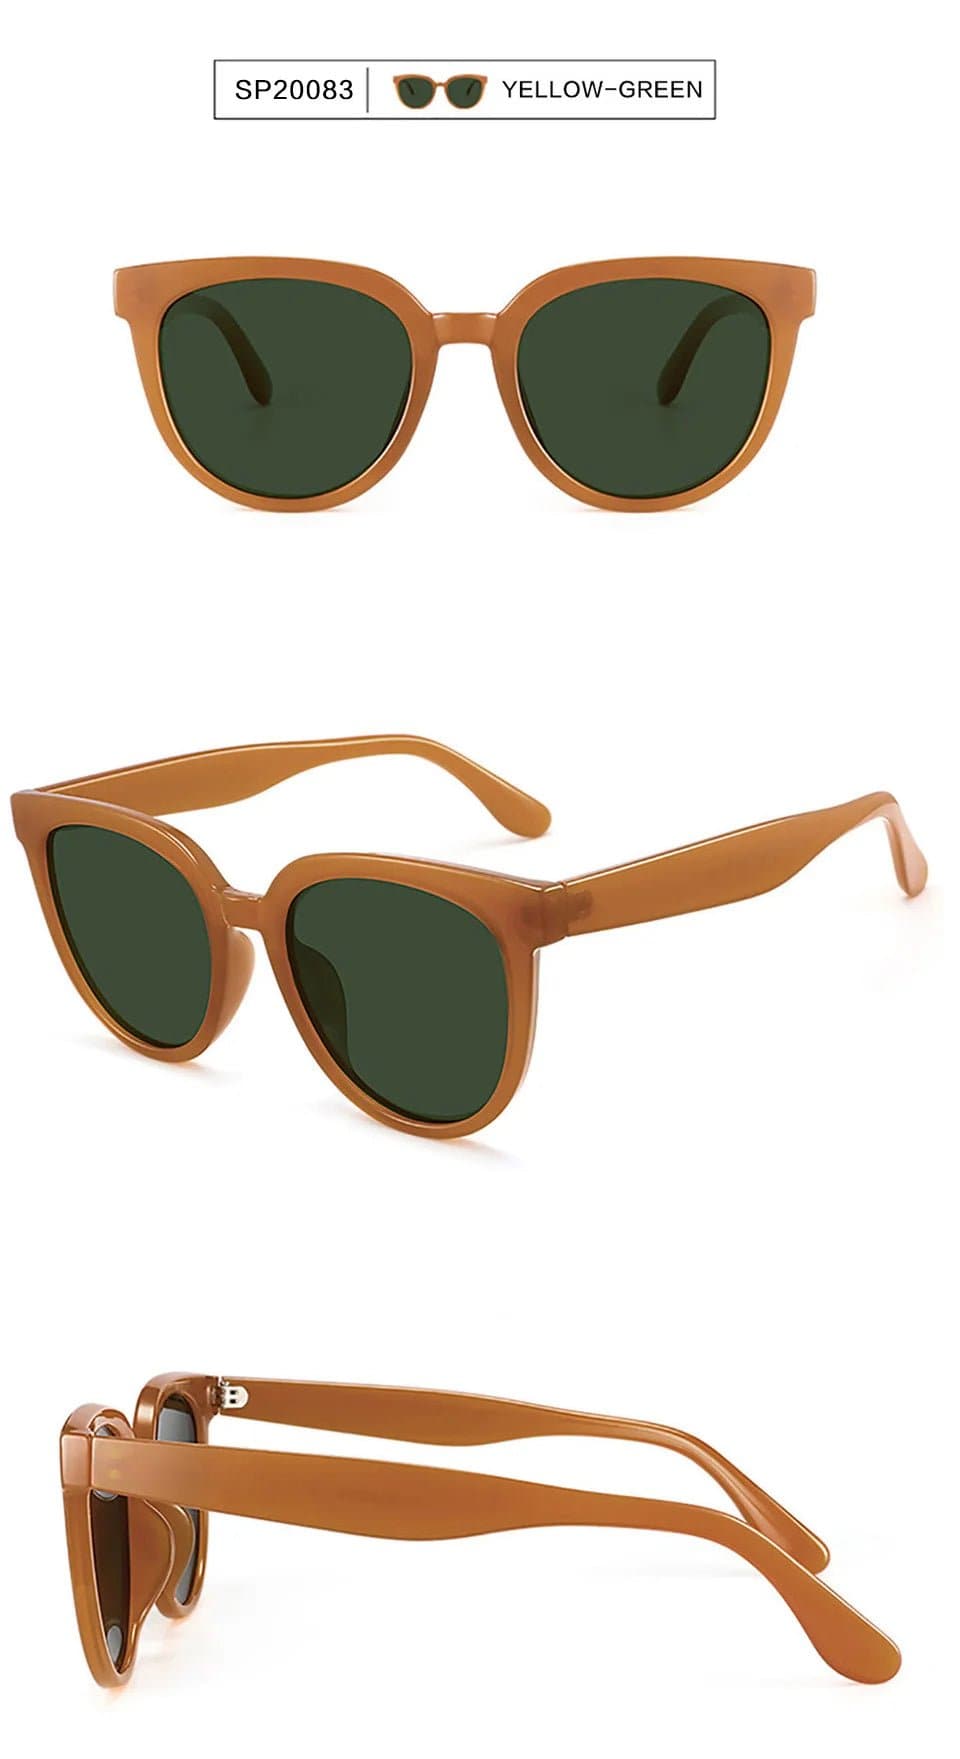 Retro Polarized Sunglasses for Women - UV400, Anti-Reflective, Oval Style - SP20083 Sunglasses - Wandering Woman